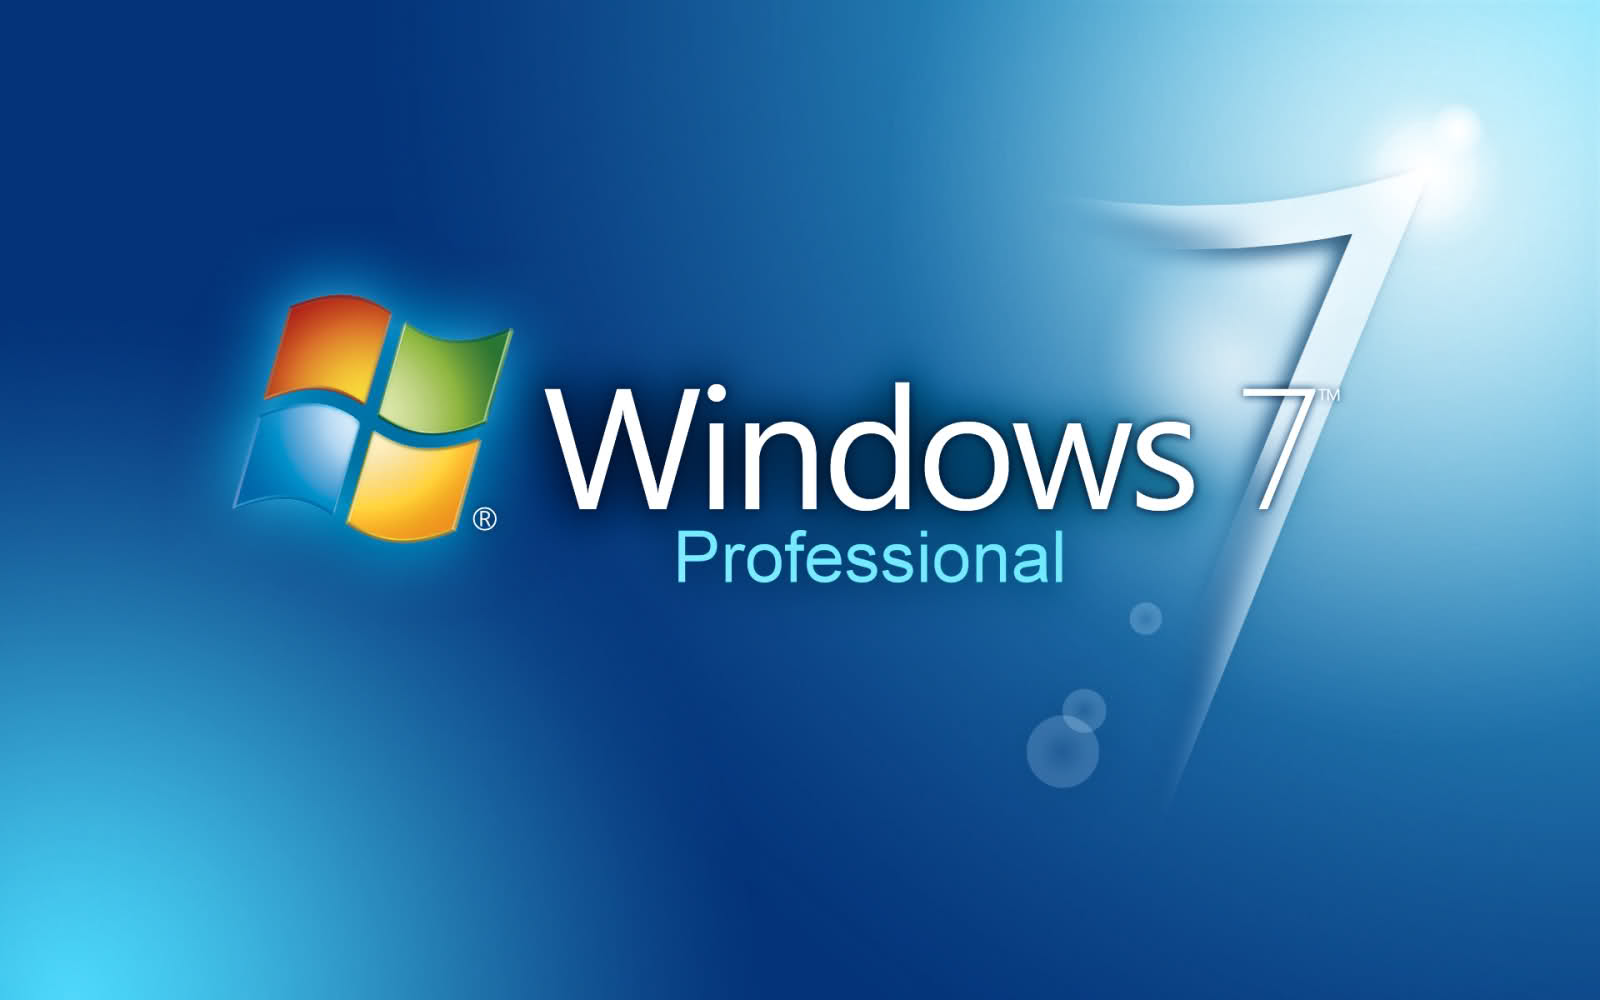 Windows xp professional 64 bit download iso deutsch